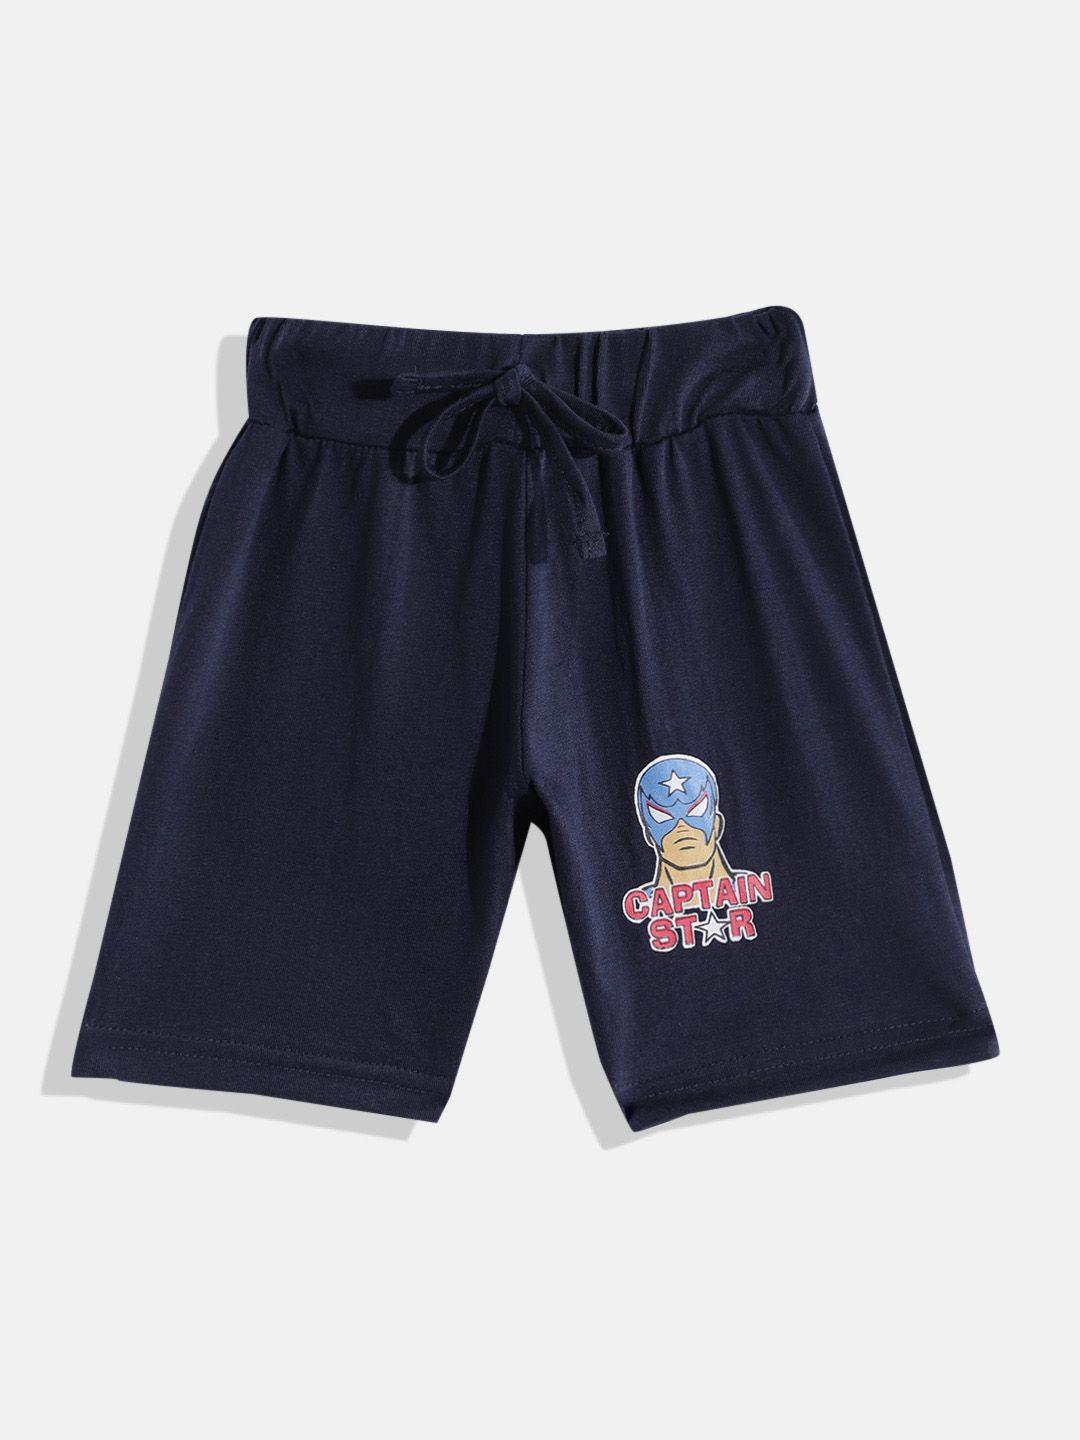 eteenz boys mid-rise captain star printed premium cotton shorts